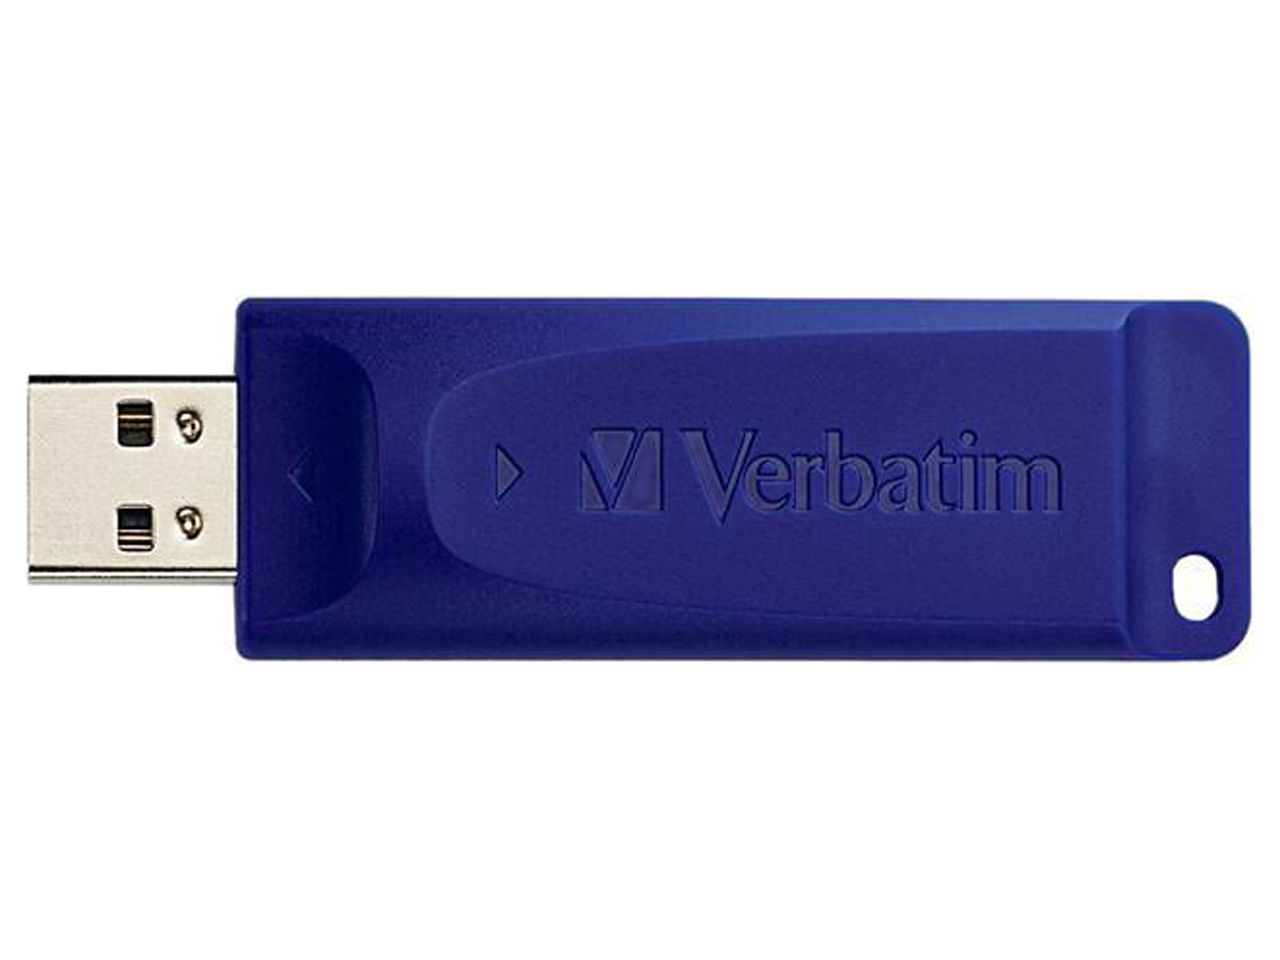 Verbatim Smart 32GB USB 2.0 Flash Drive Model 97408 - image 1 of 4